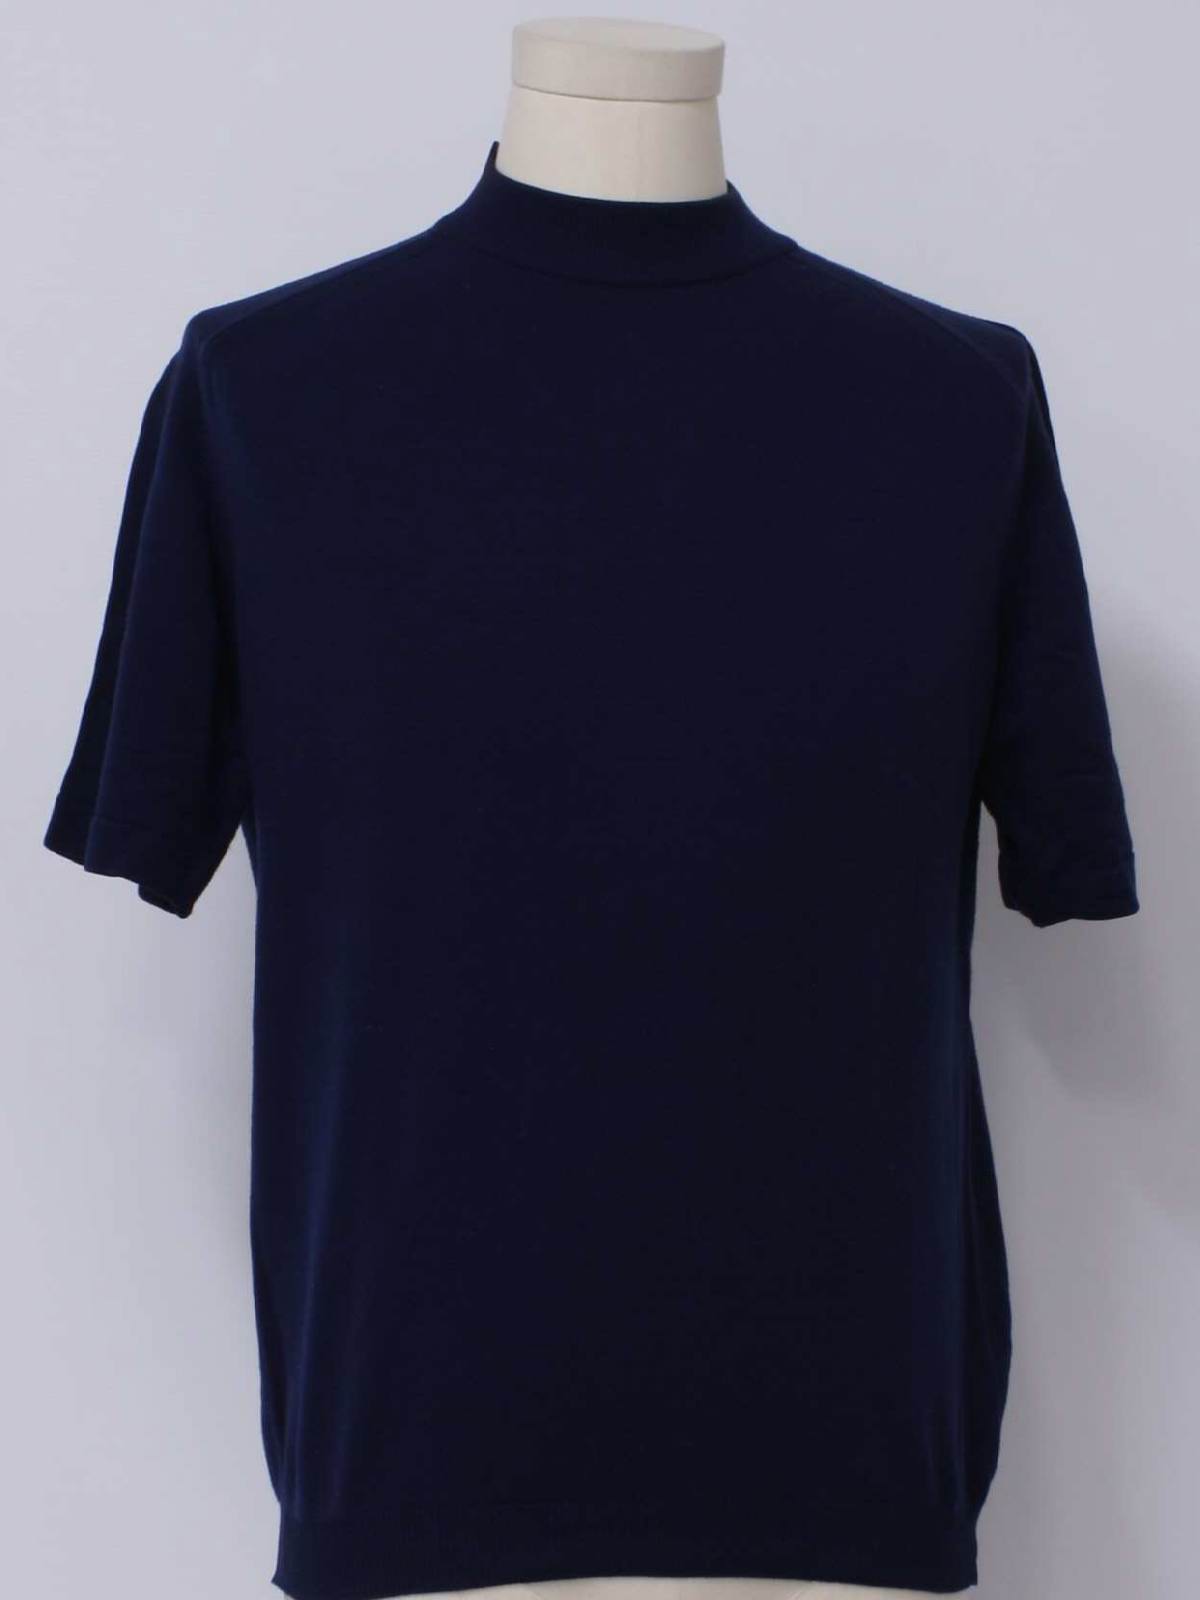 Retro 80s Knit Shirt (Puritan) : 80s -Puritan- Mens navy blue nylon ...